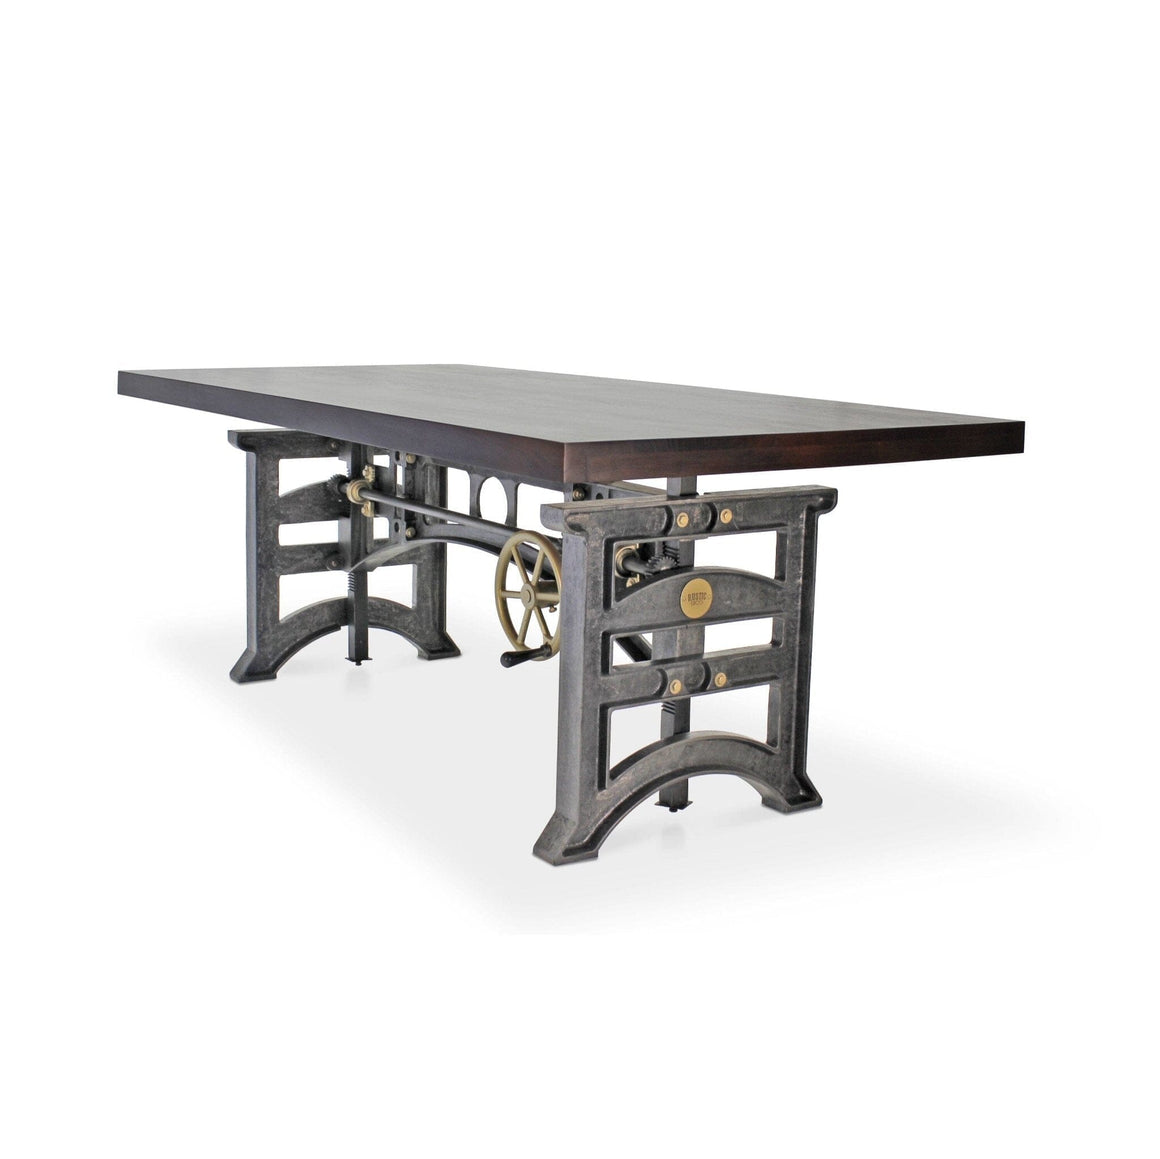 Harvester Industrial Executive Desk - Cast Iron Adjustable Base – Ebony Top - Rustic Deco Incorporated